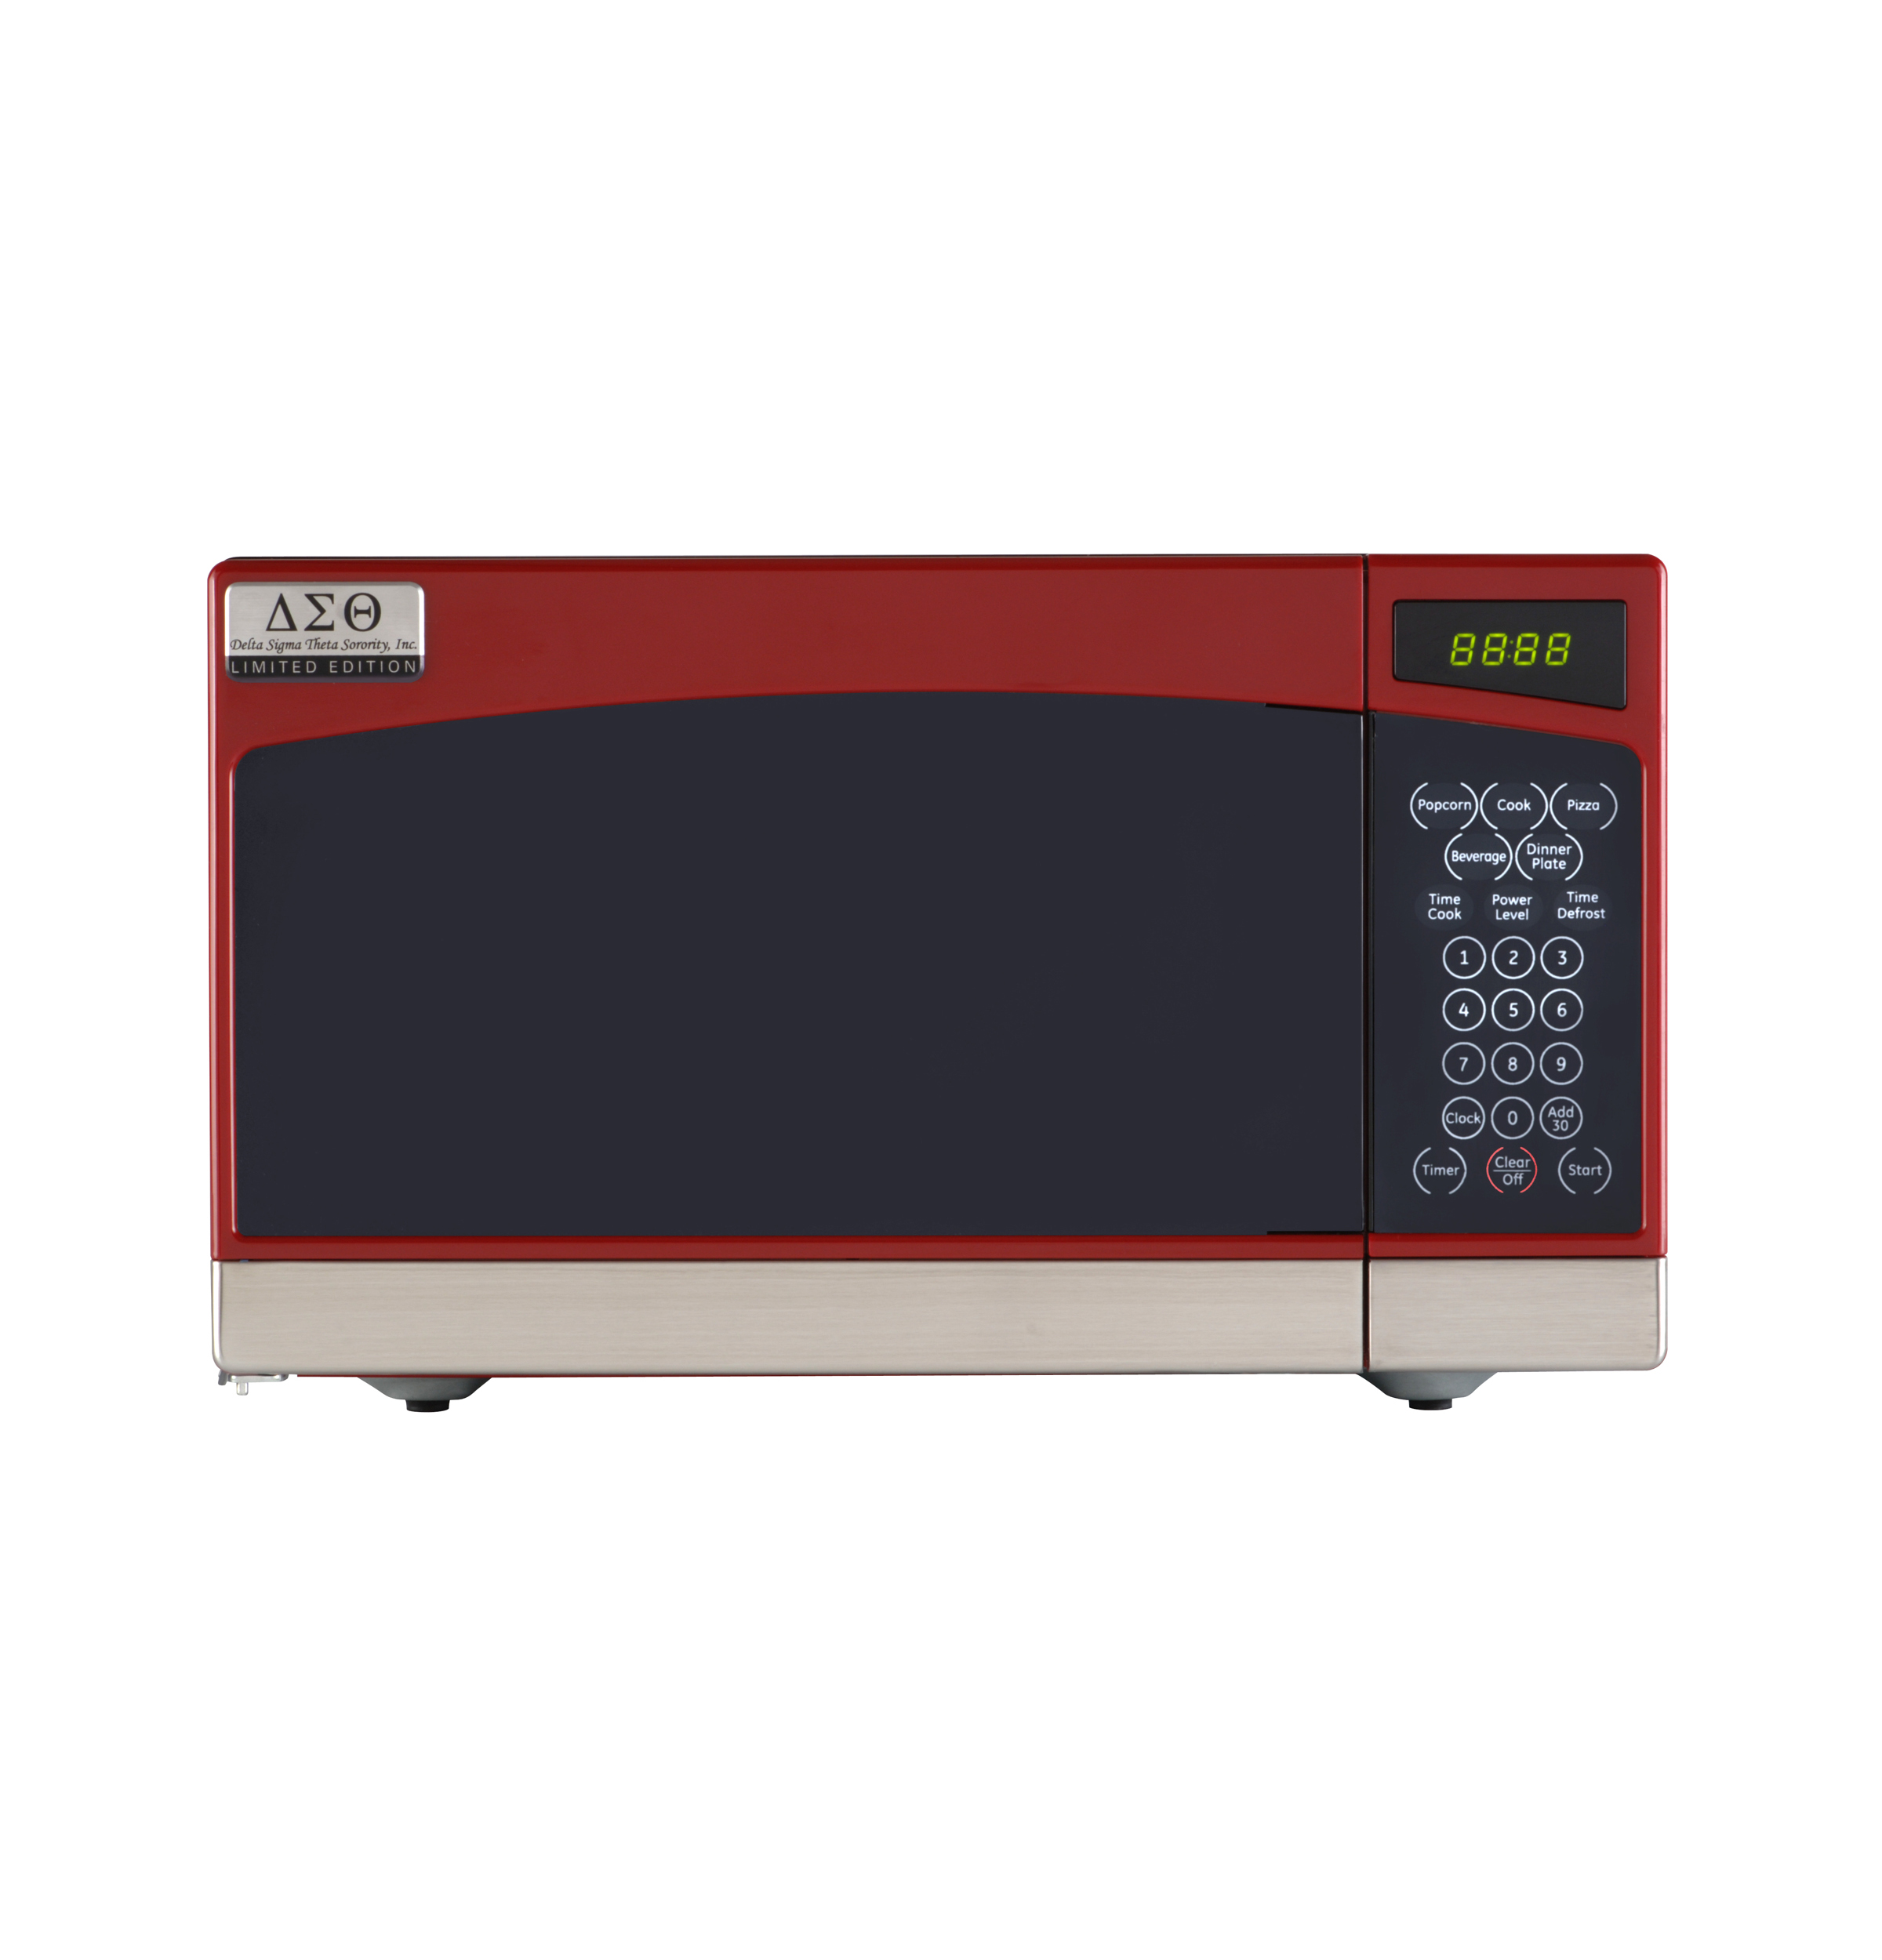 Delta Sigma Theta .7 Cu. Ft. Capacity Countertop Microwave Oven